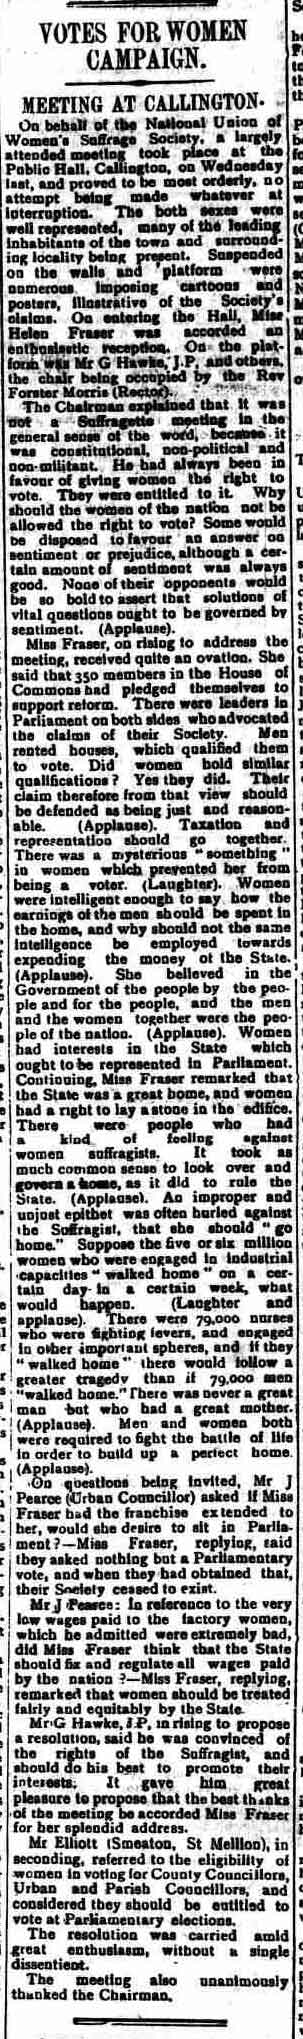 Callington suffragette meeting on April 30th, 1910